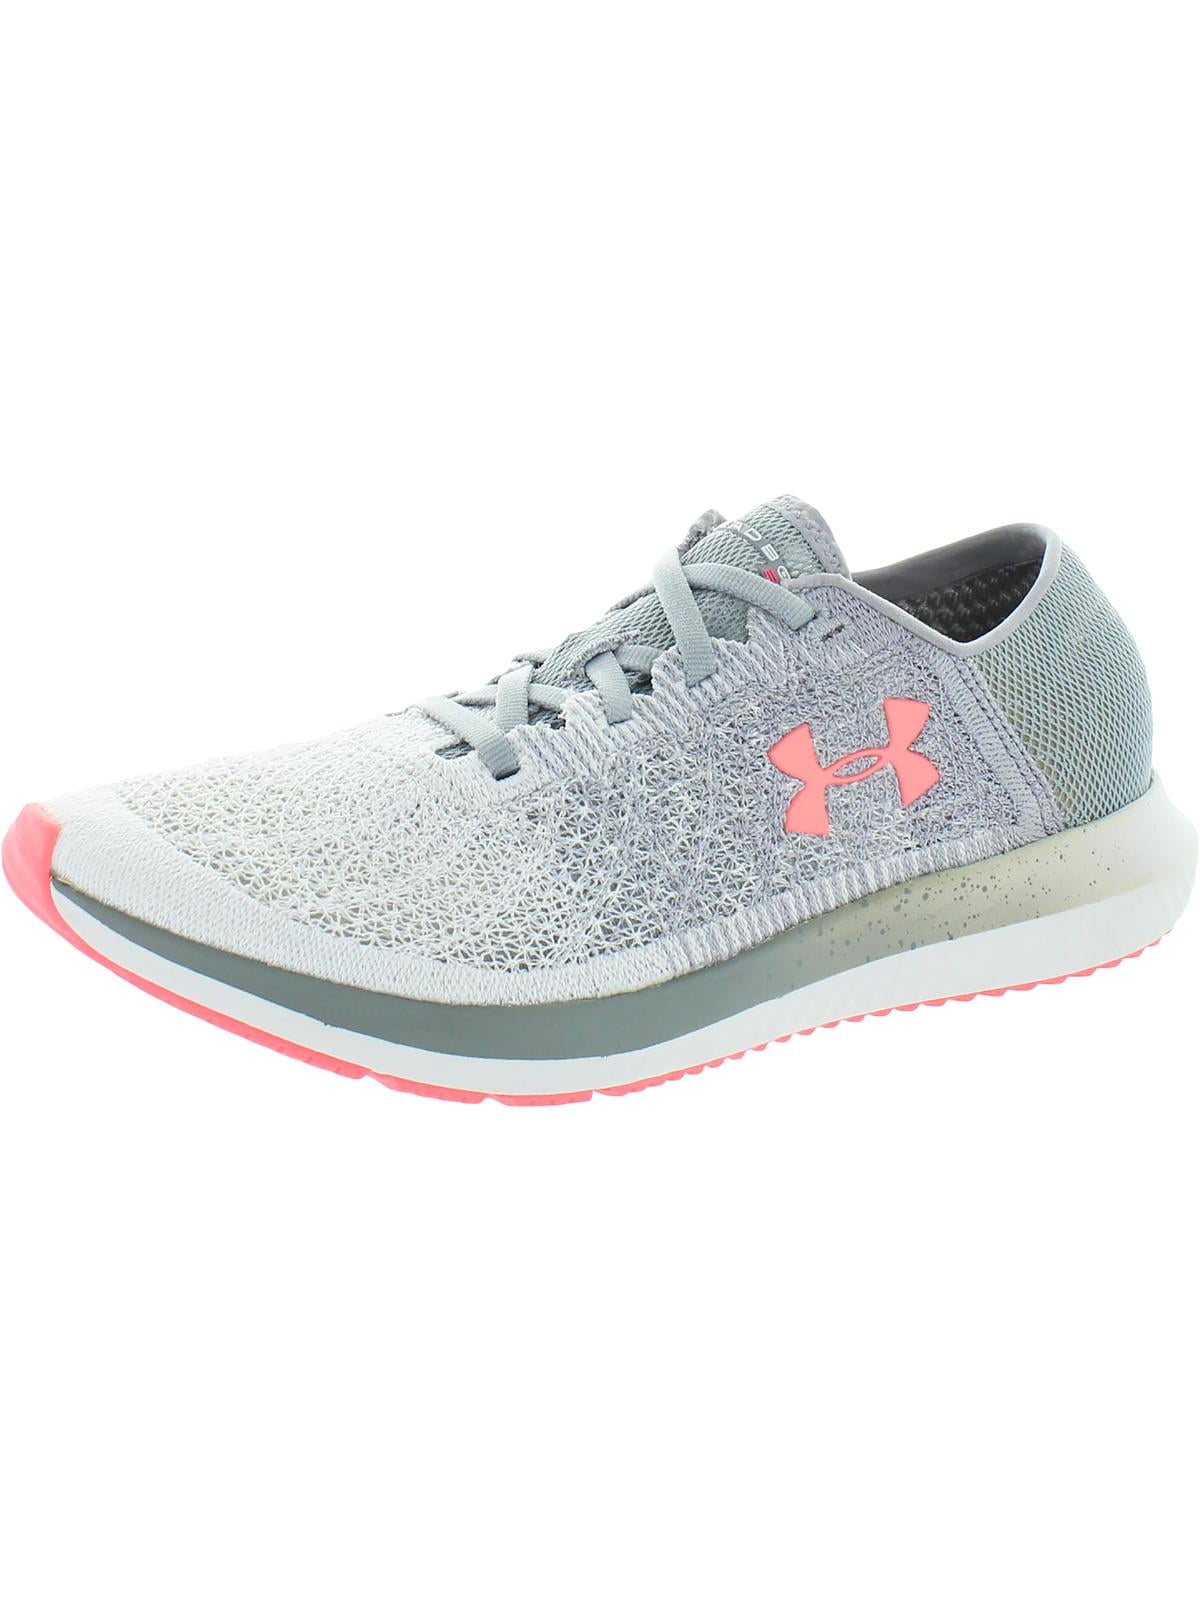 Under Armour Womens Blur Fitness Running Shoes Gray Medium (B,M) - Walmart.com